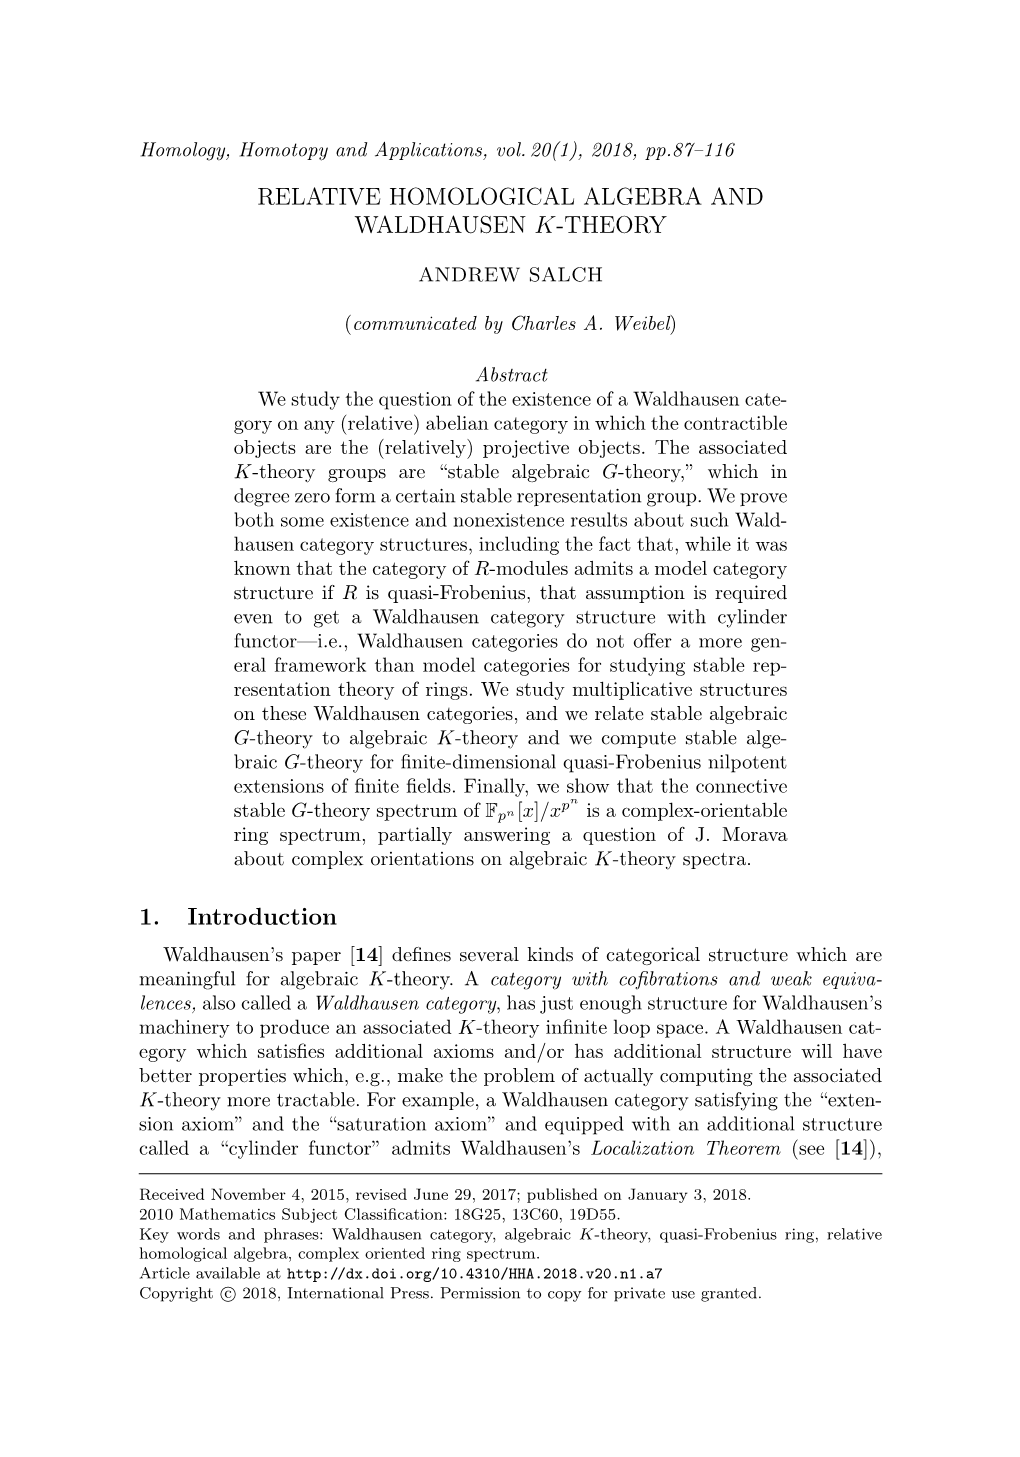 Relative Homological Algebra and Waldhausen K-Theory